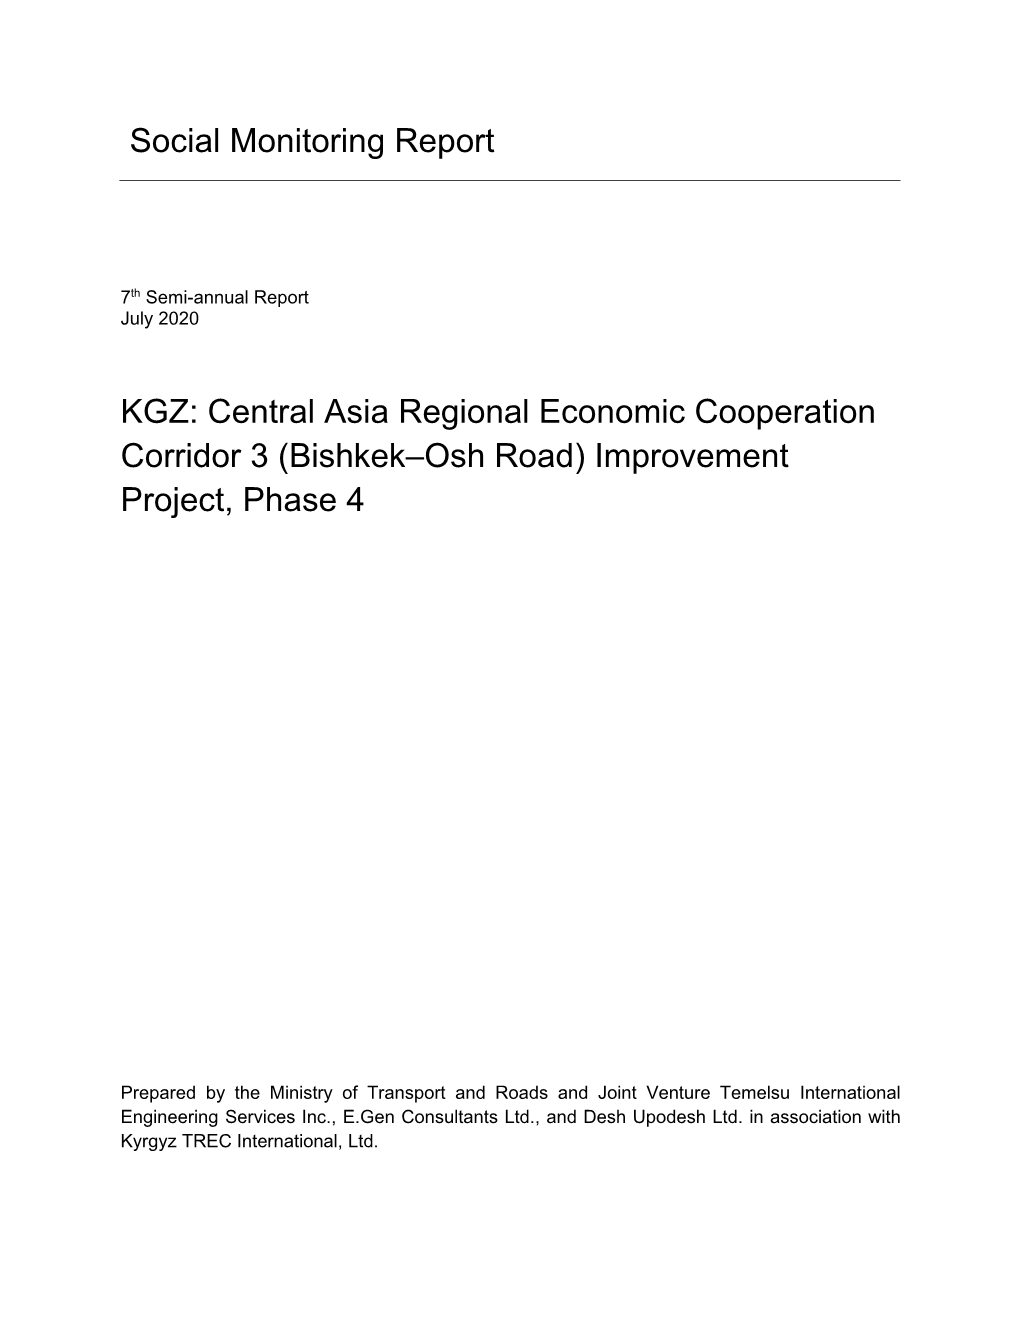 Social Monitoring Report KGZ: Central Asia Regional Economic Cooperation Corridor 3 (Bishkek–Osh Road) Improvement Project, Ph